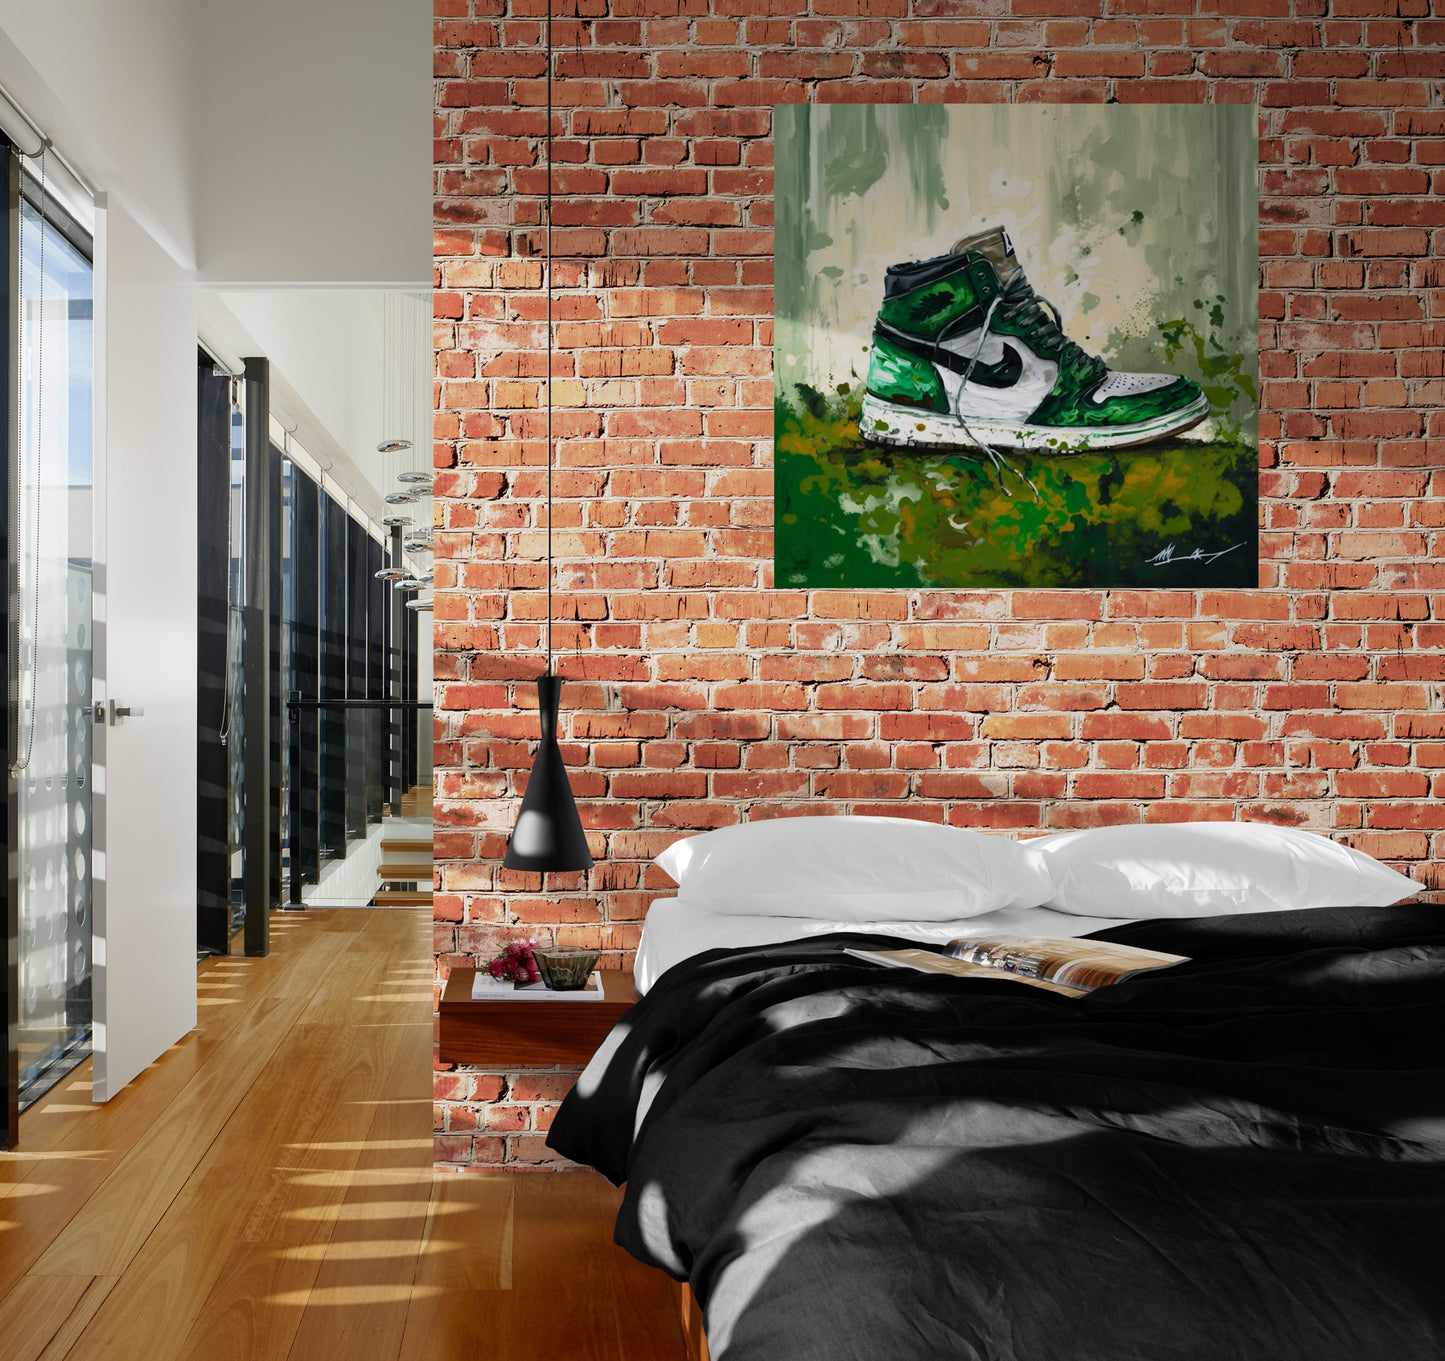 Tableau Air Jordan, Sneakers verts, décoration murale tendance